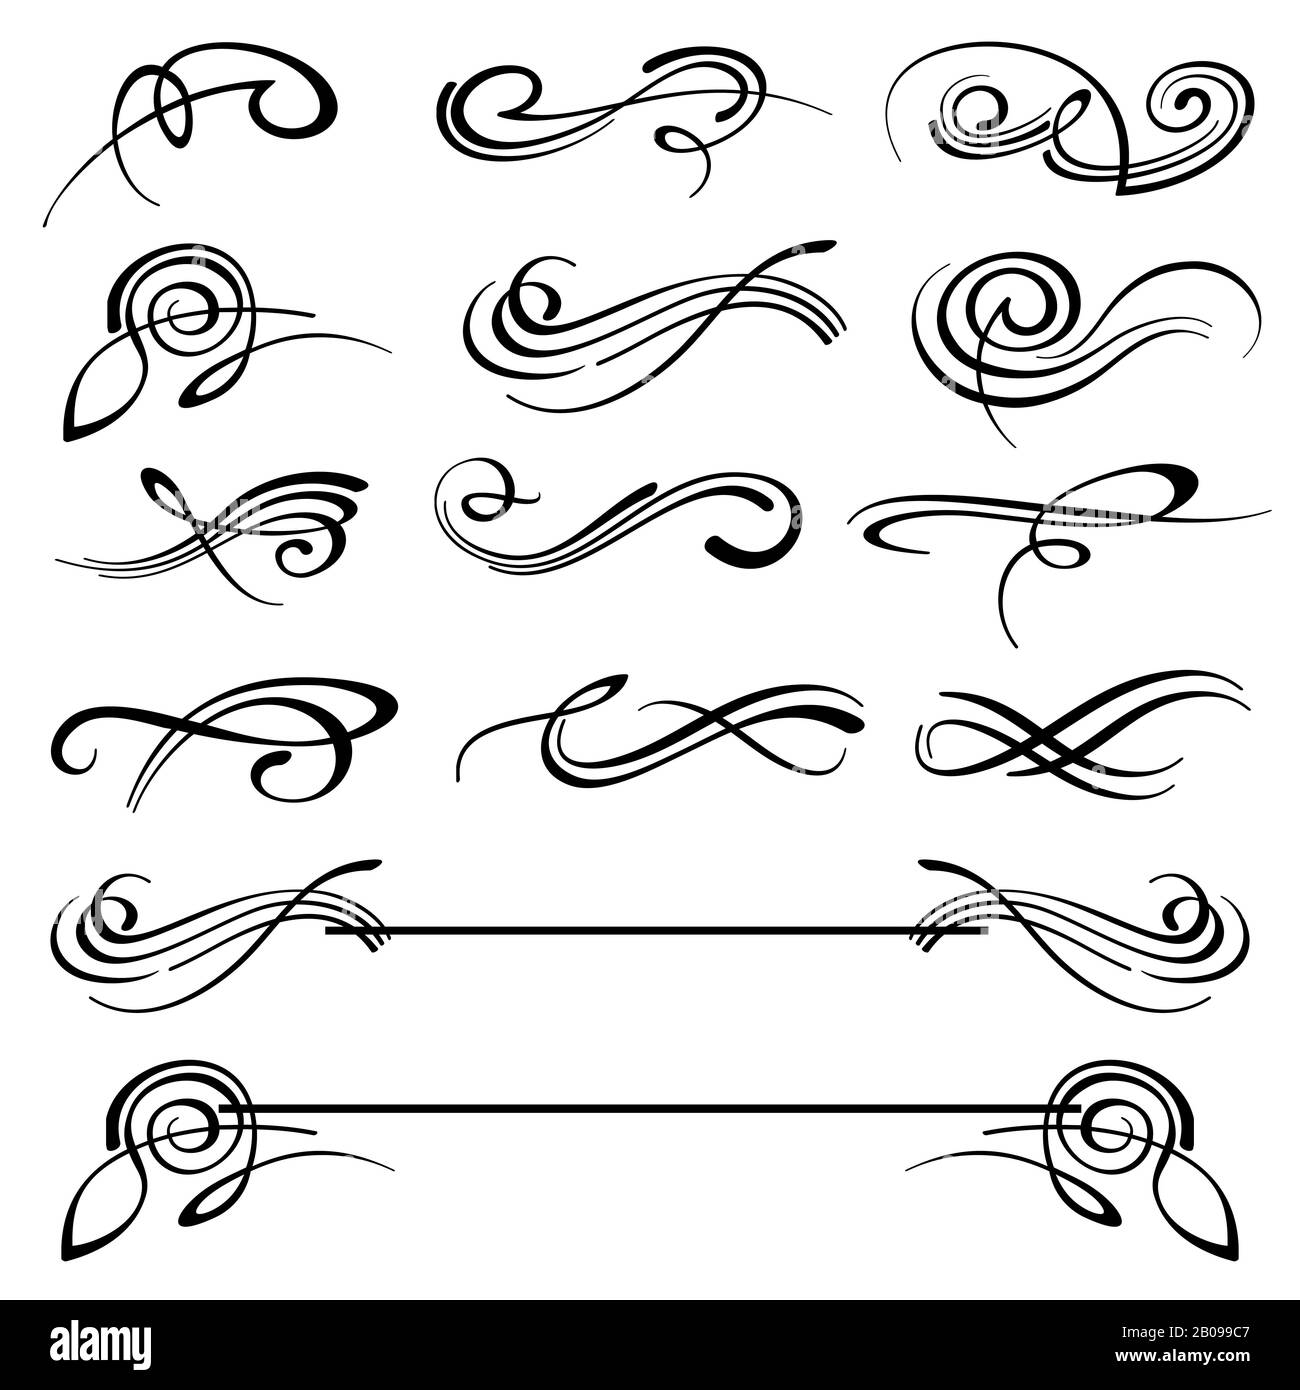 Calligraphy swirls ornate flourish vector decoration set. Calligraphy flourish tattoo, illustration of decoration flourish classical elements Stock Vector